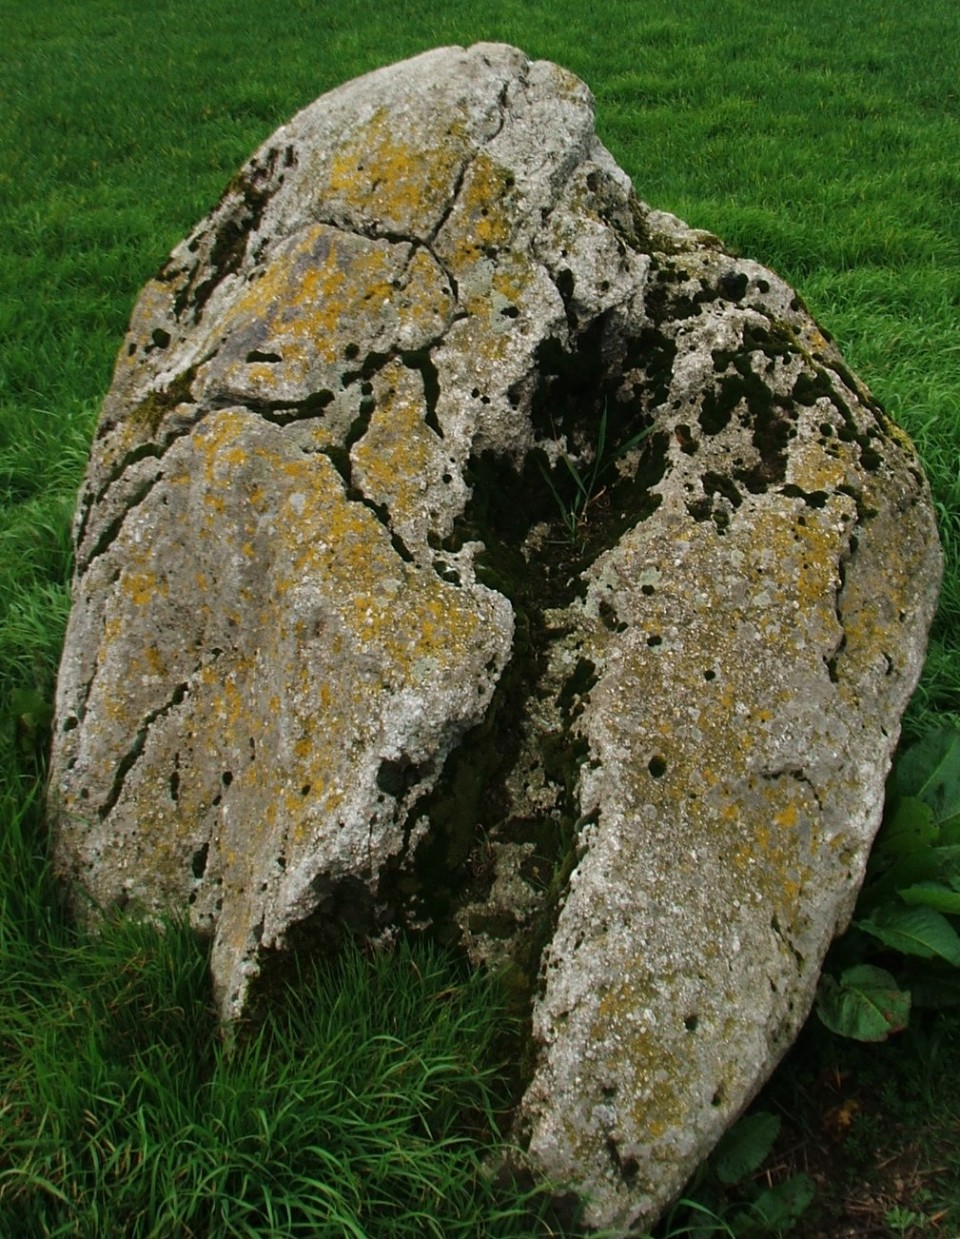 Knobley (Standing Stone / Menhir) by postman